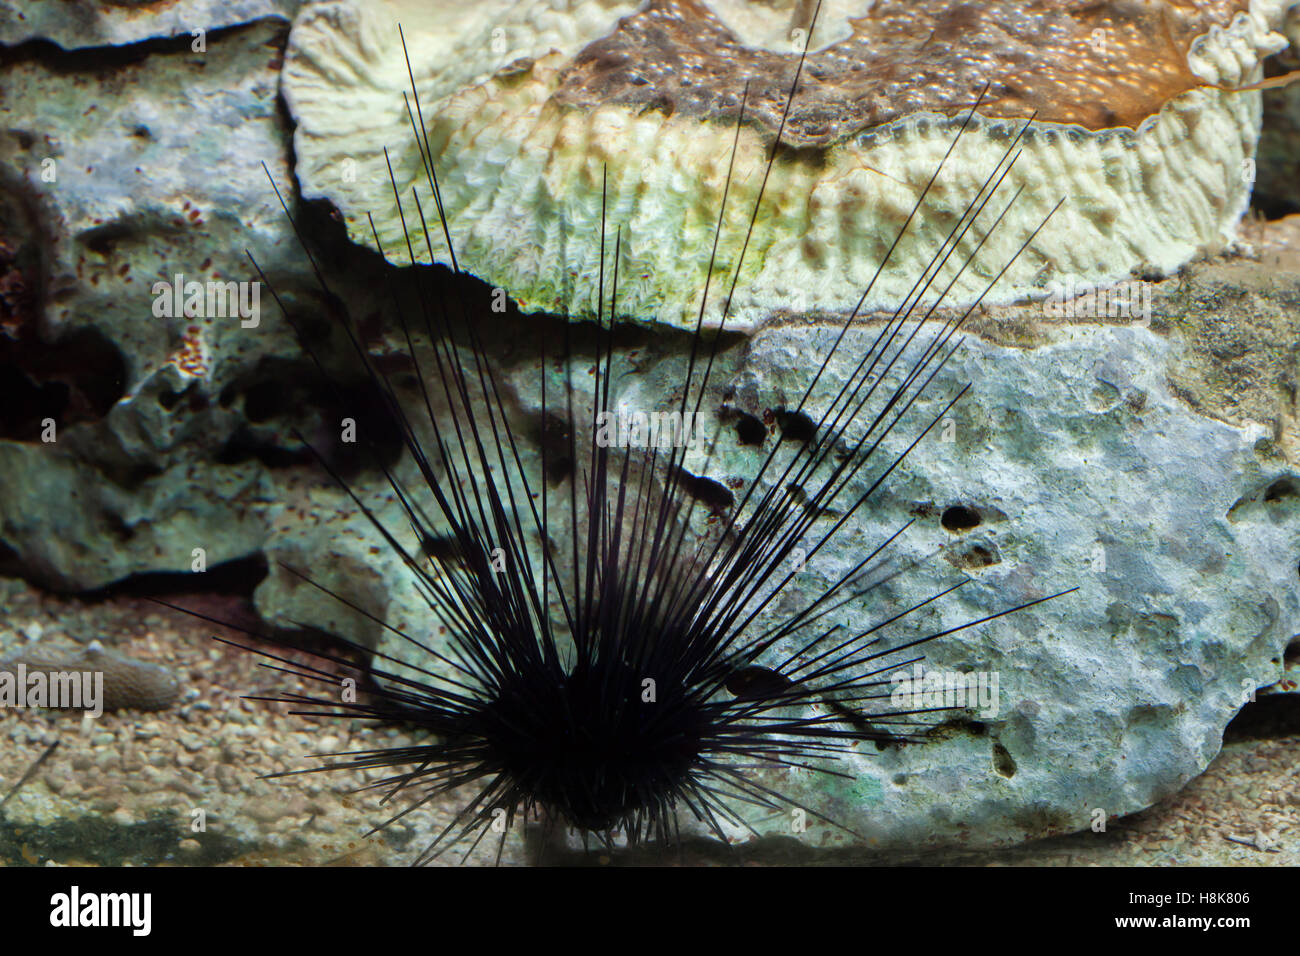 Long-spined sea urchin (Diadema setosum). Stock Photo